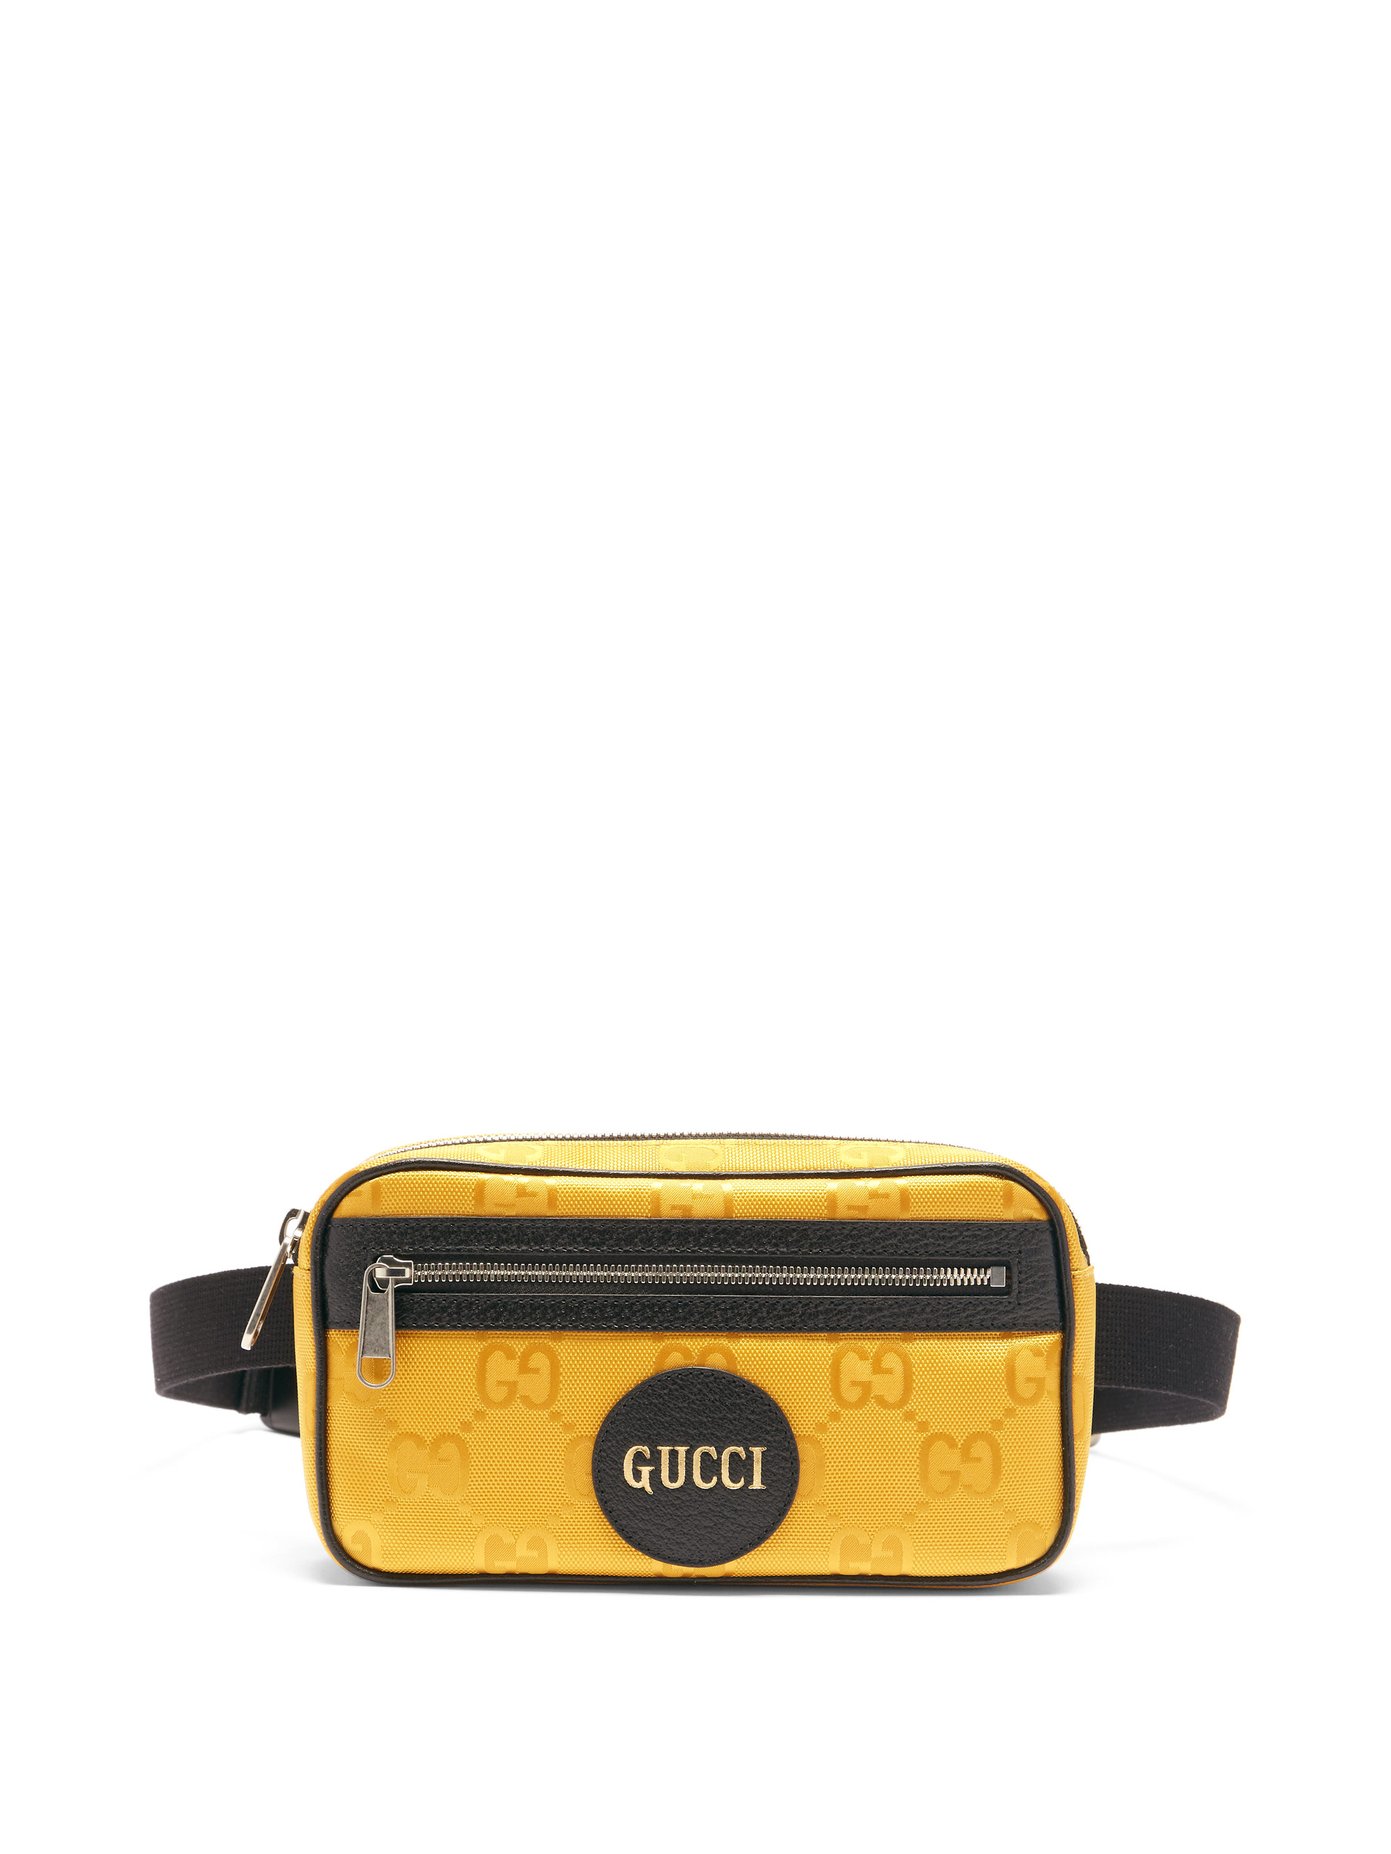 gucci belted bag